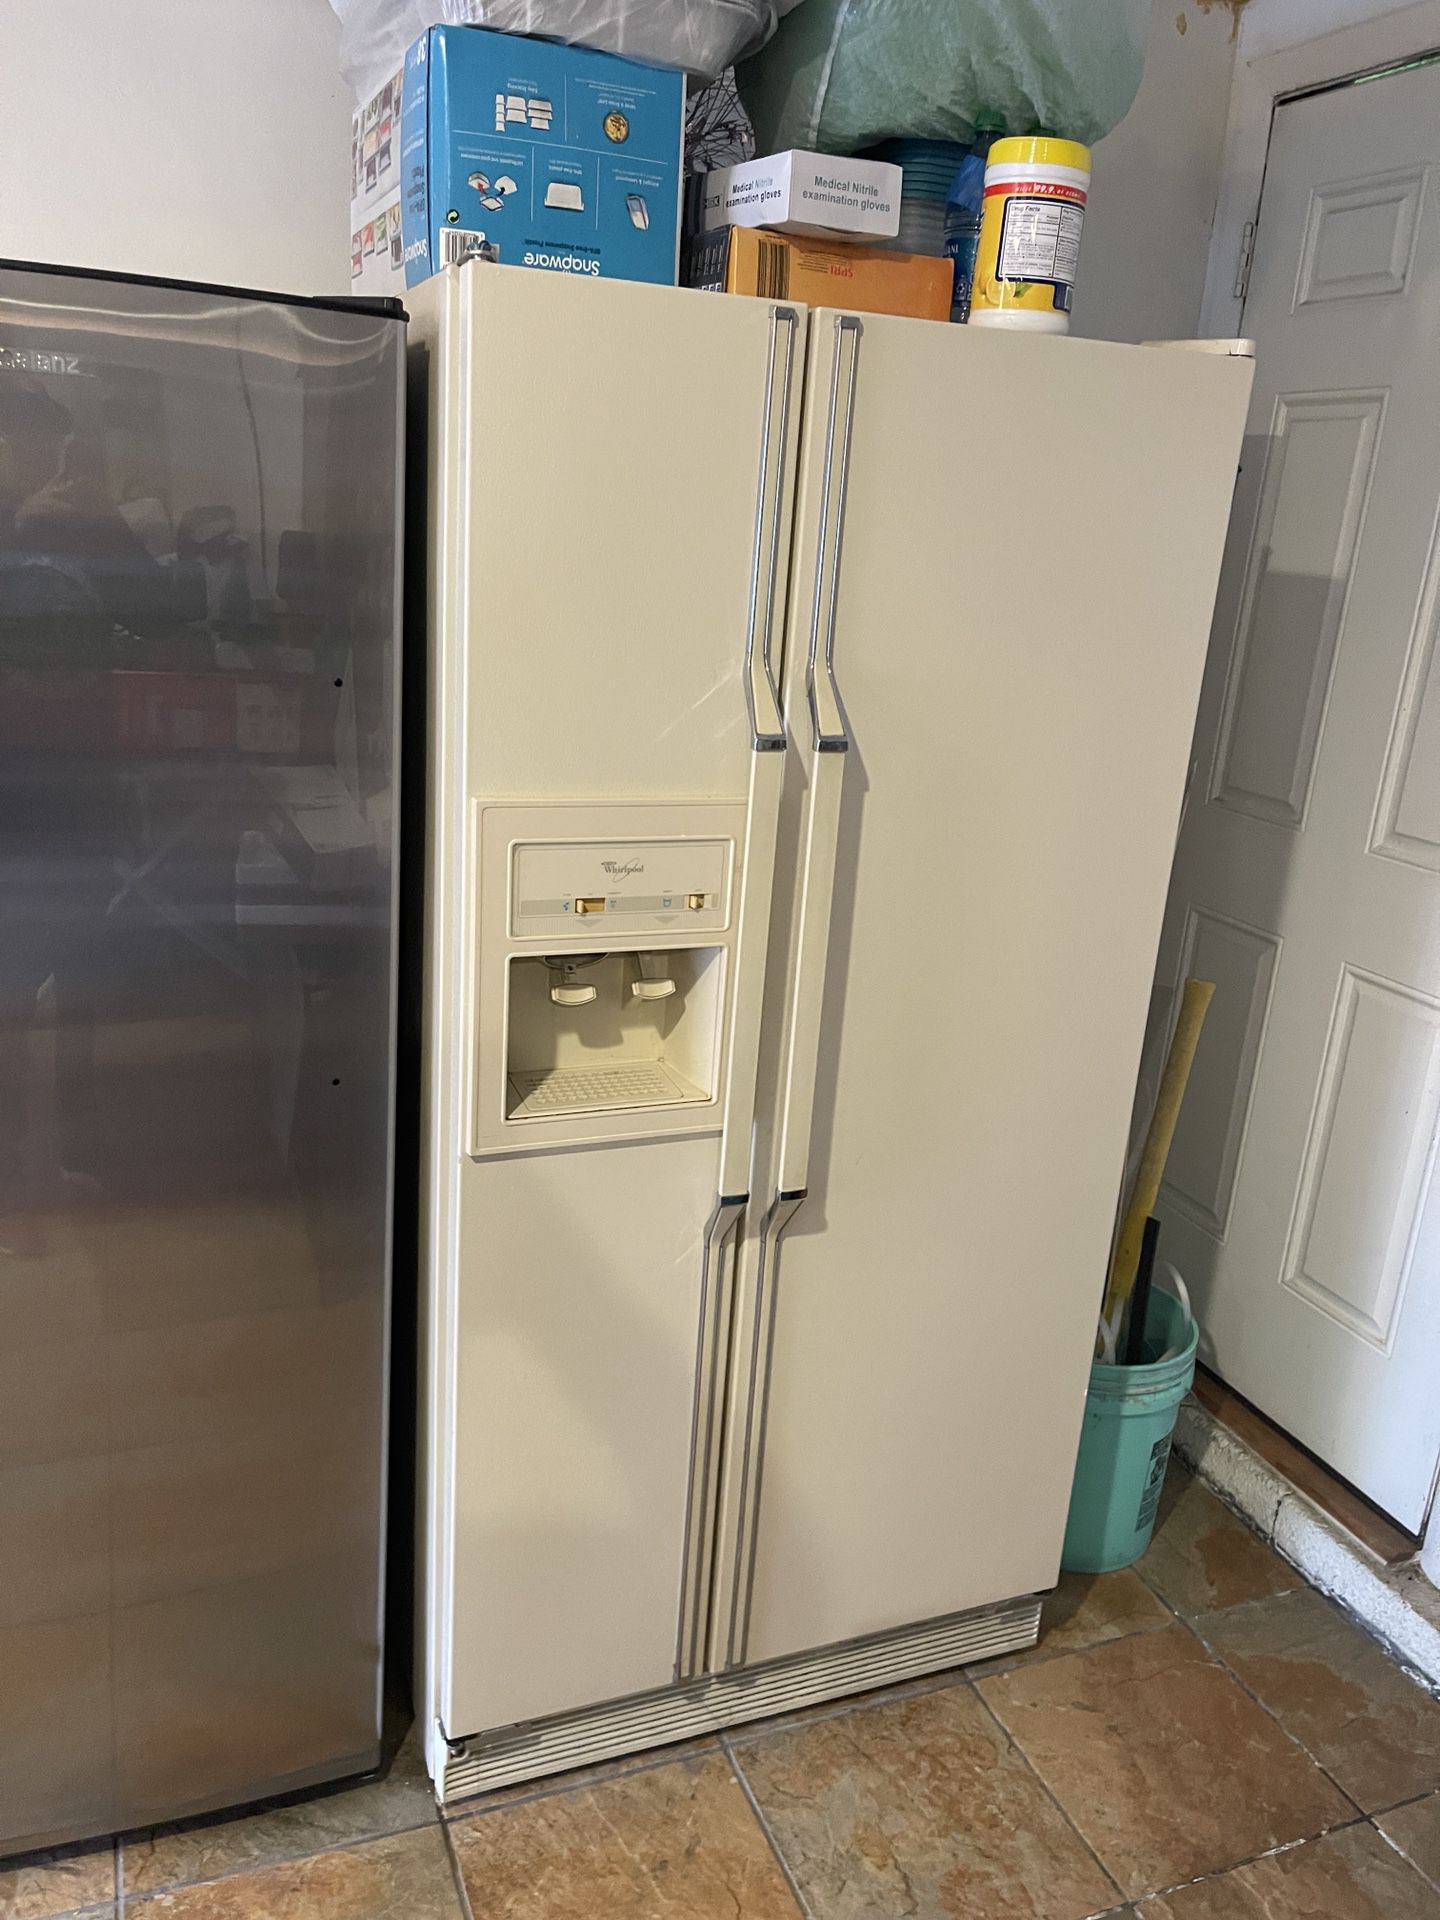 Whirlpool Refrigerator | Mint Working In Order |